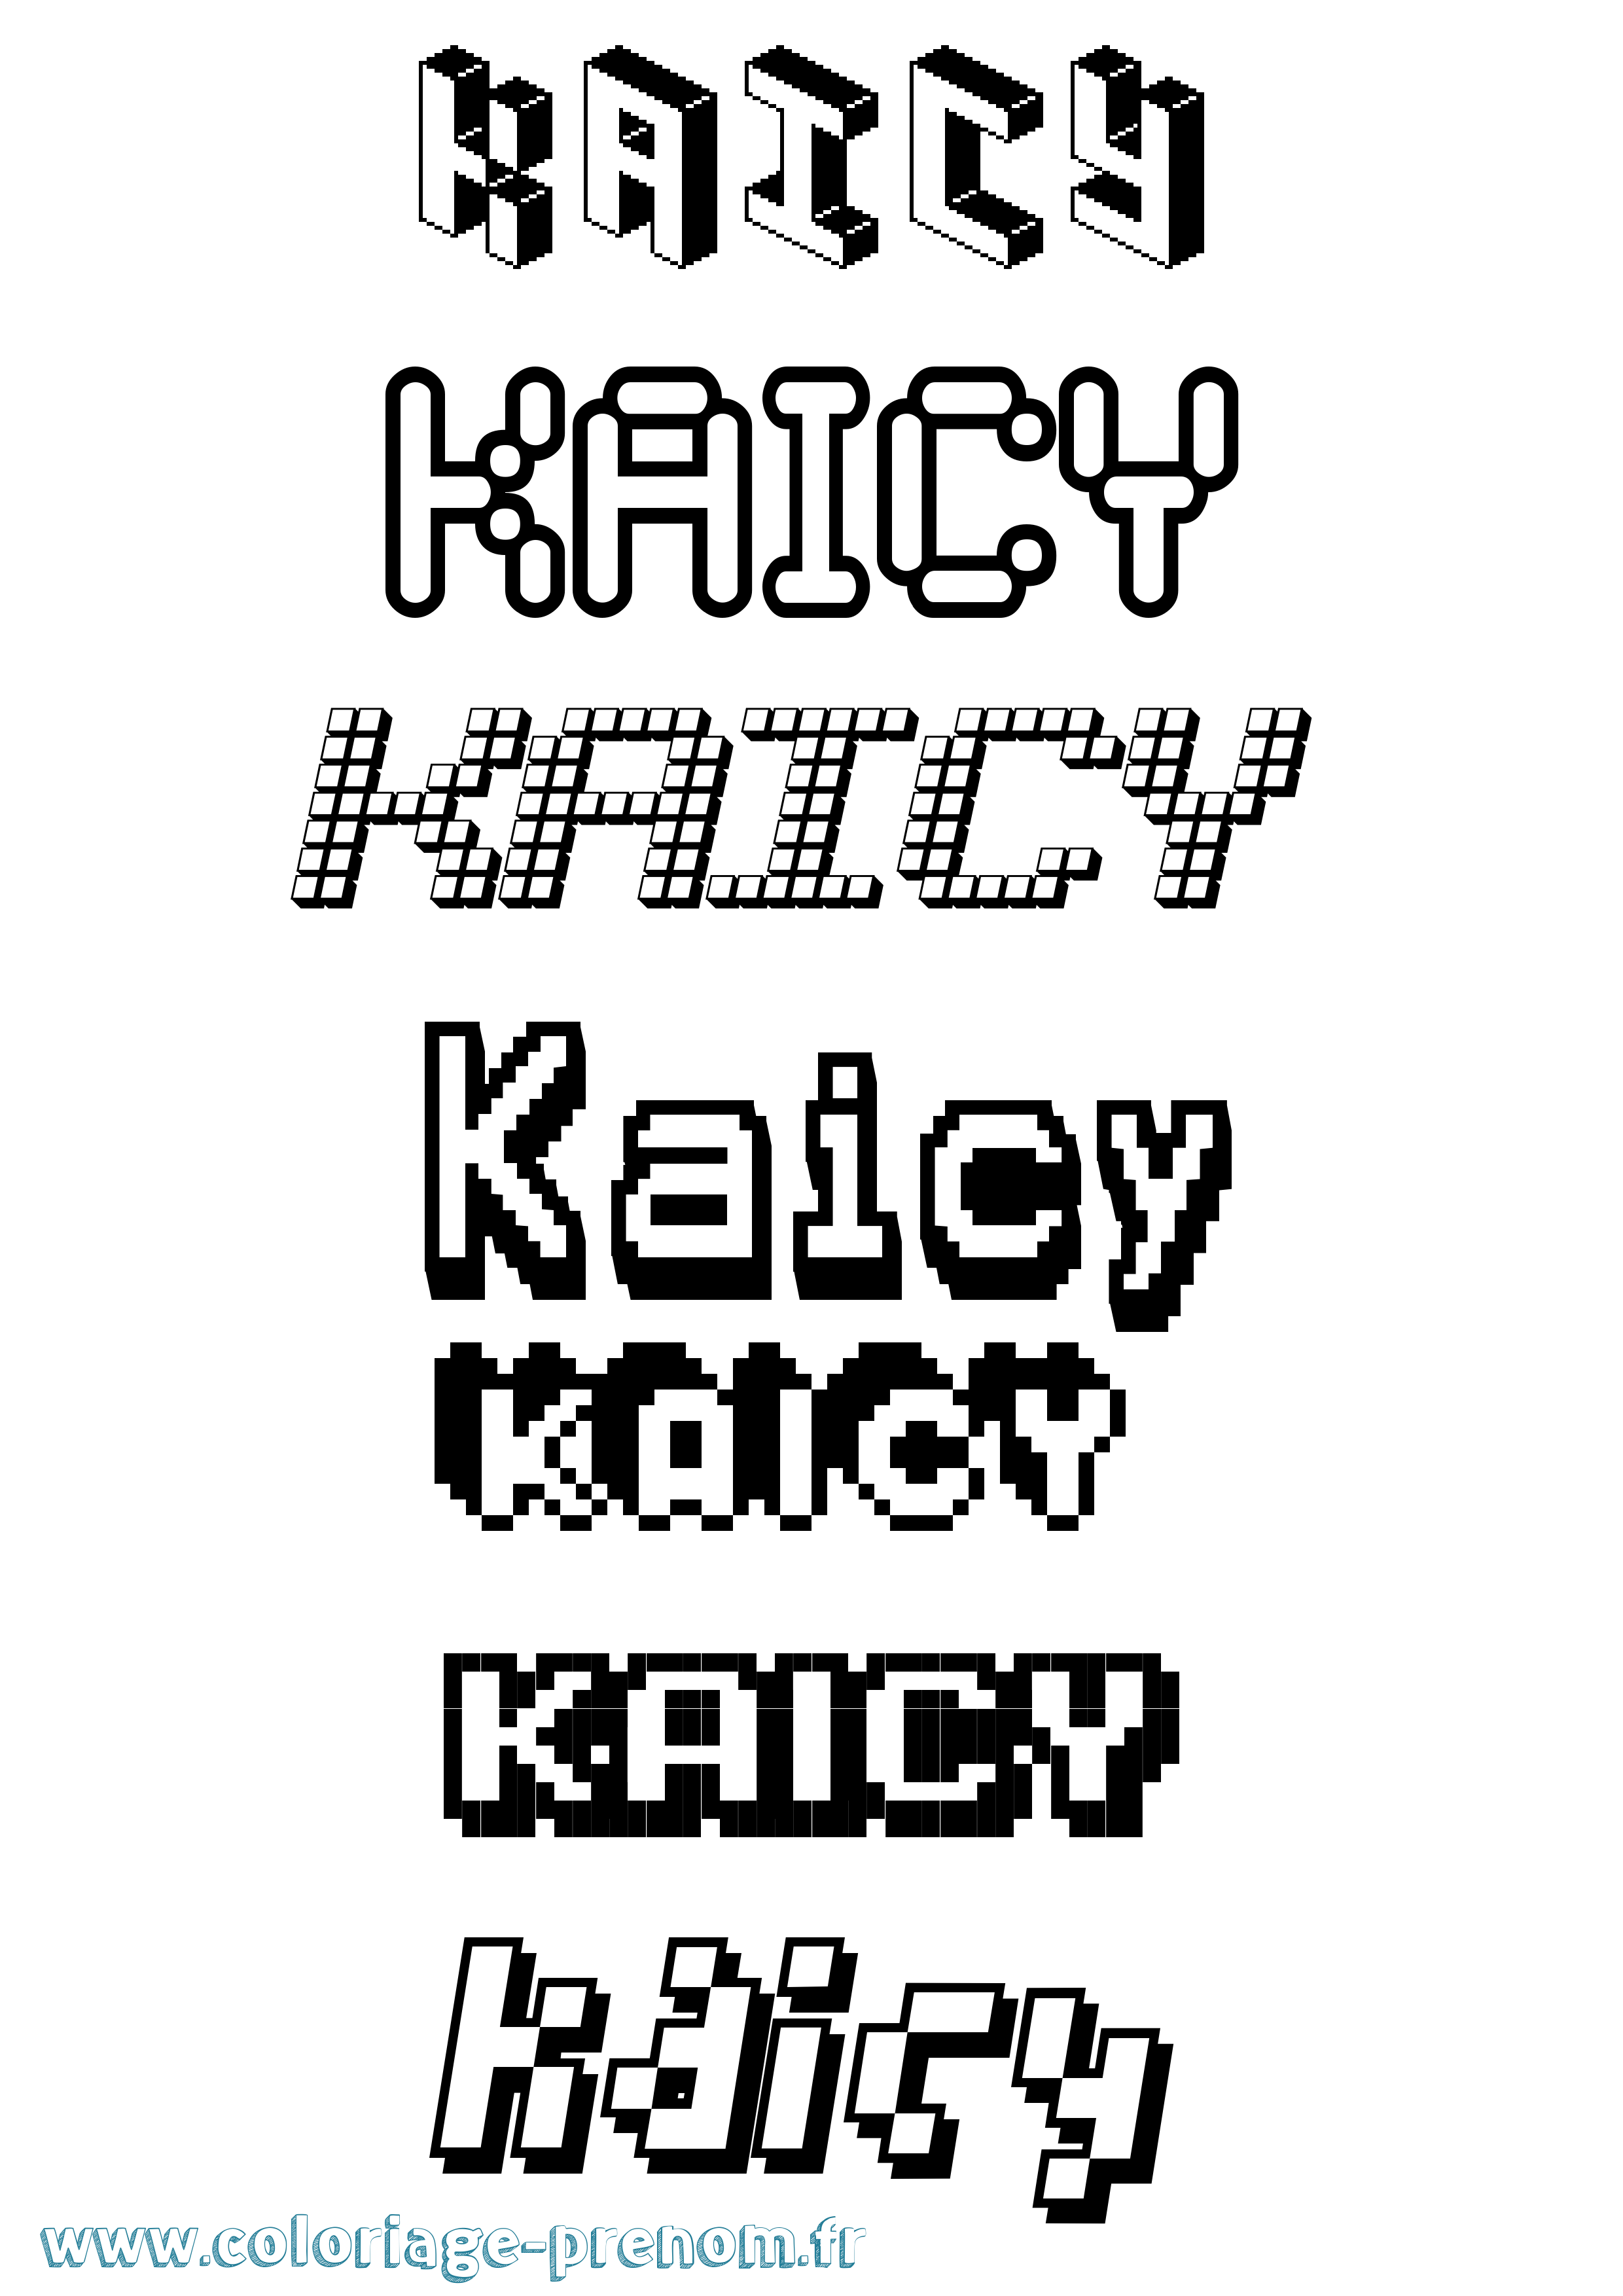 Coloriage prénom Kaicy Pixel